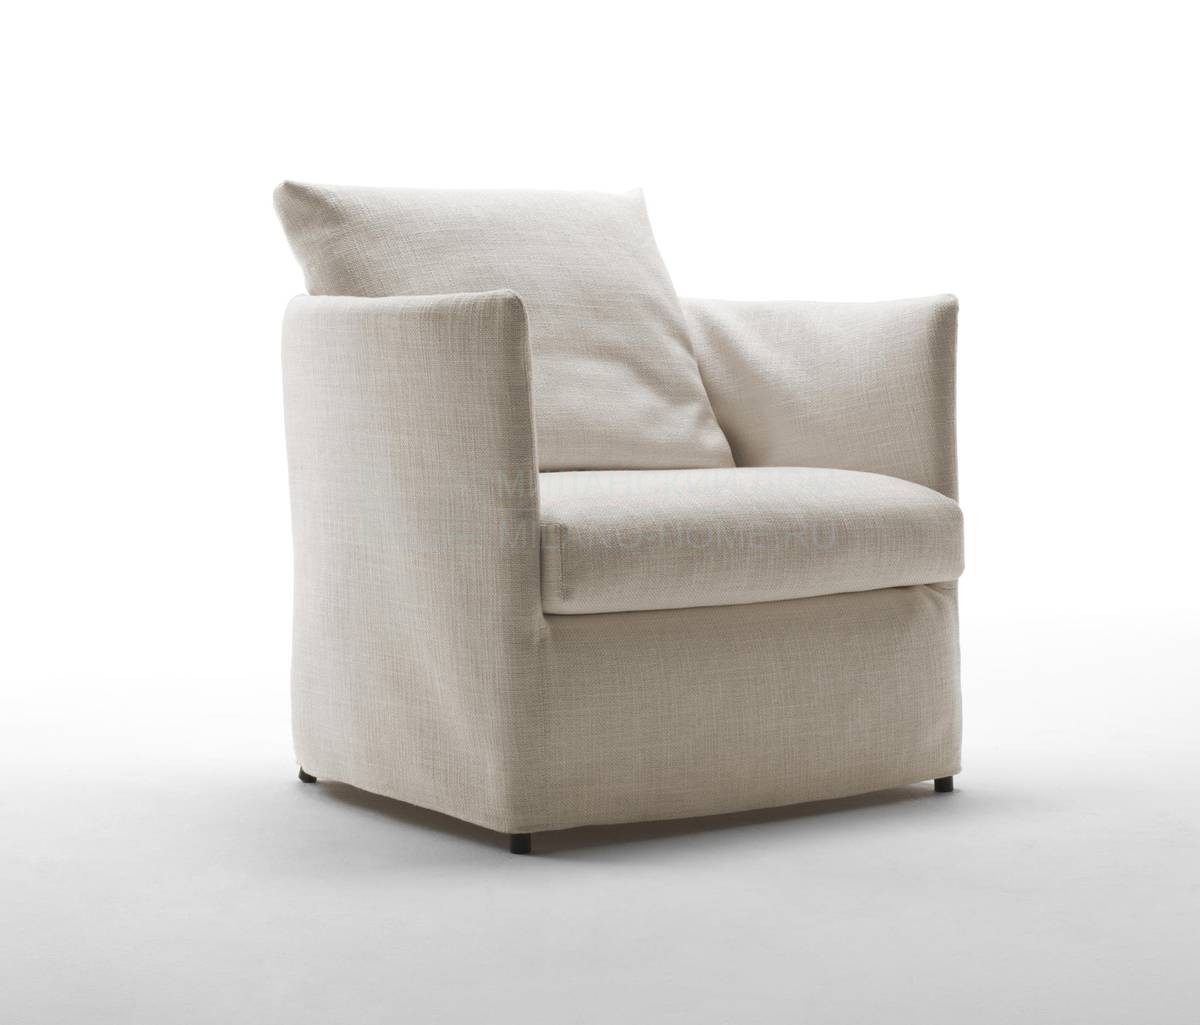 Кресло Curve armchair из Италии фабрики LIVING DIVANI